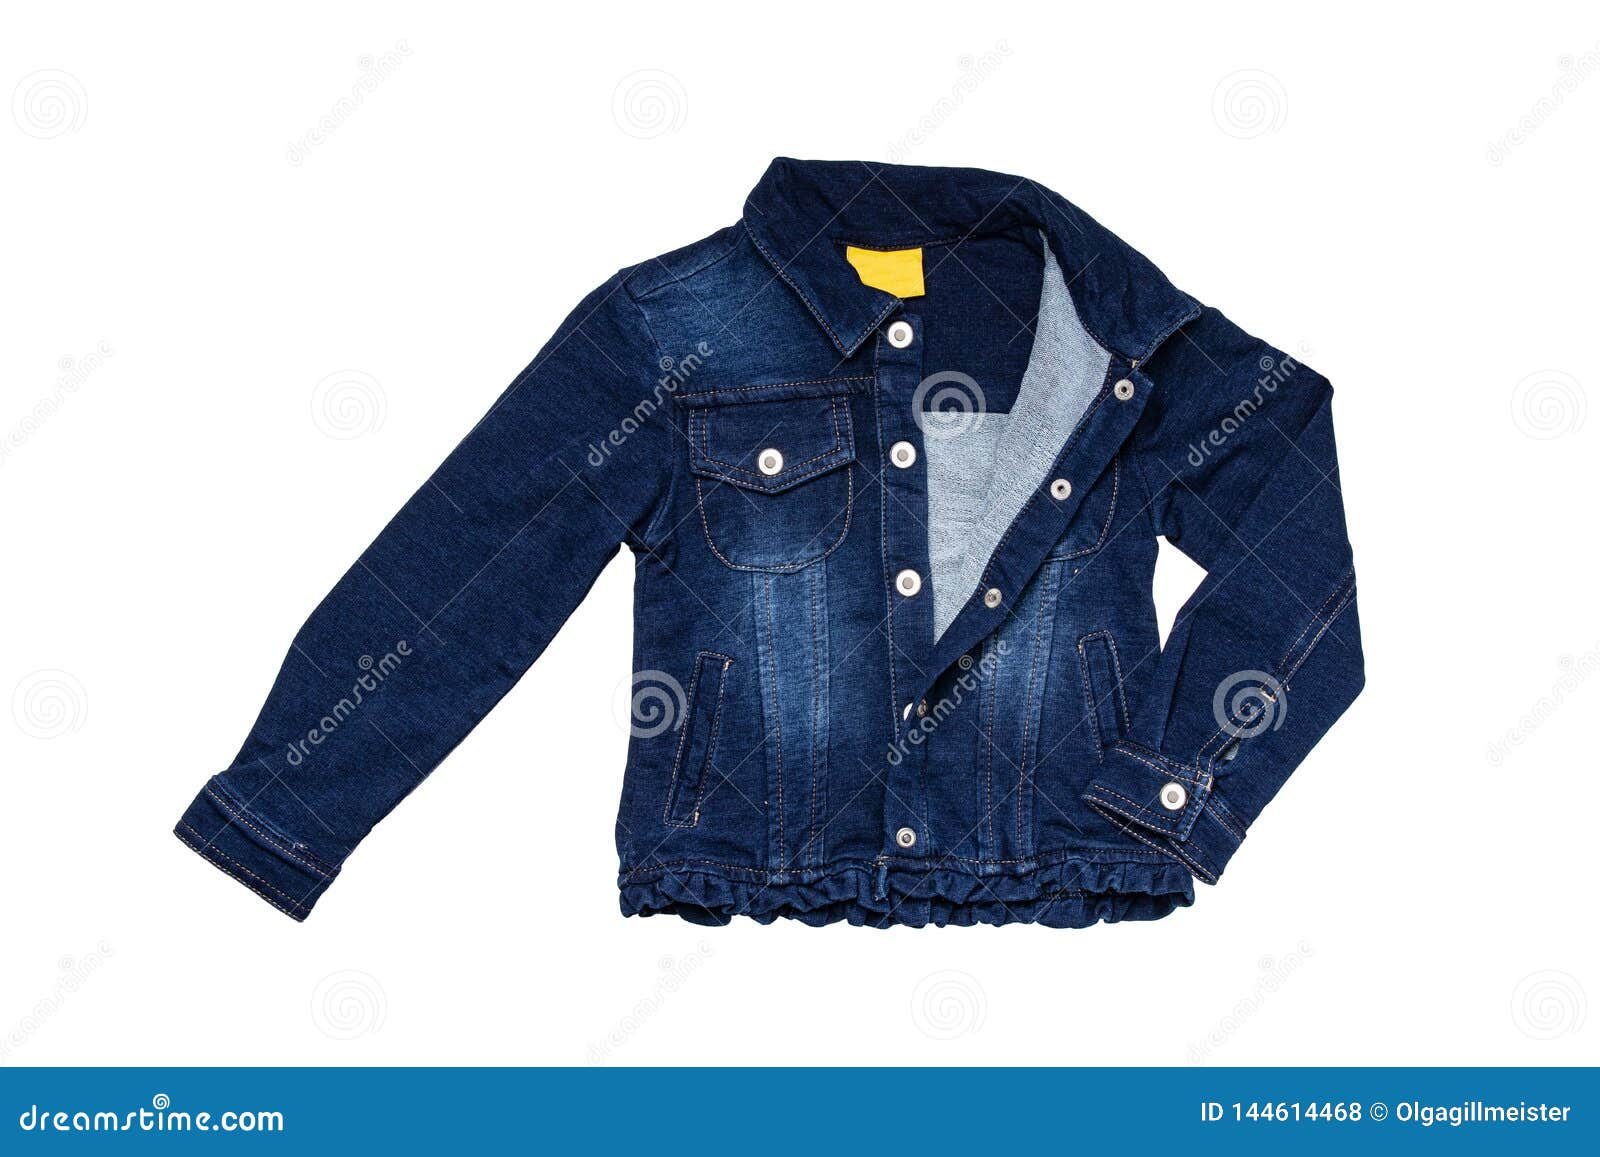 A2Z 4 Kids Kids Girls Denim Light Blue Jacket Designers Fashion Jeans Gilet Faded Stylish Sleeveless School Jackets Coats New Age 3 4 5 6 7 8 9 10 11 12 13 Years